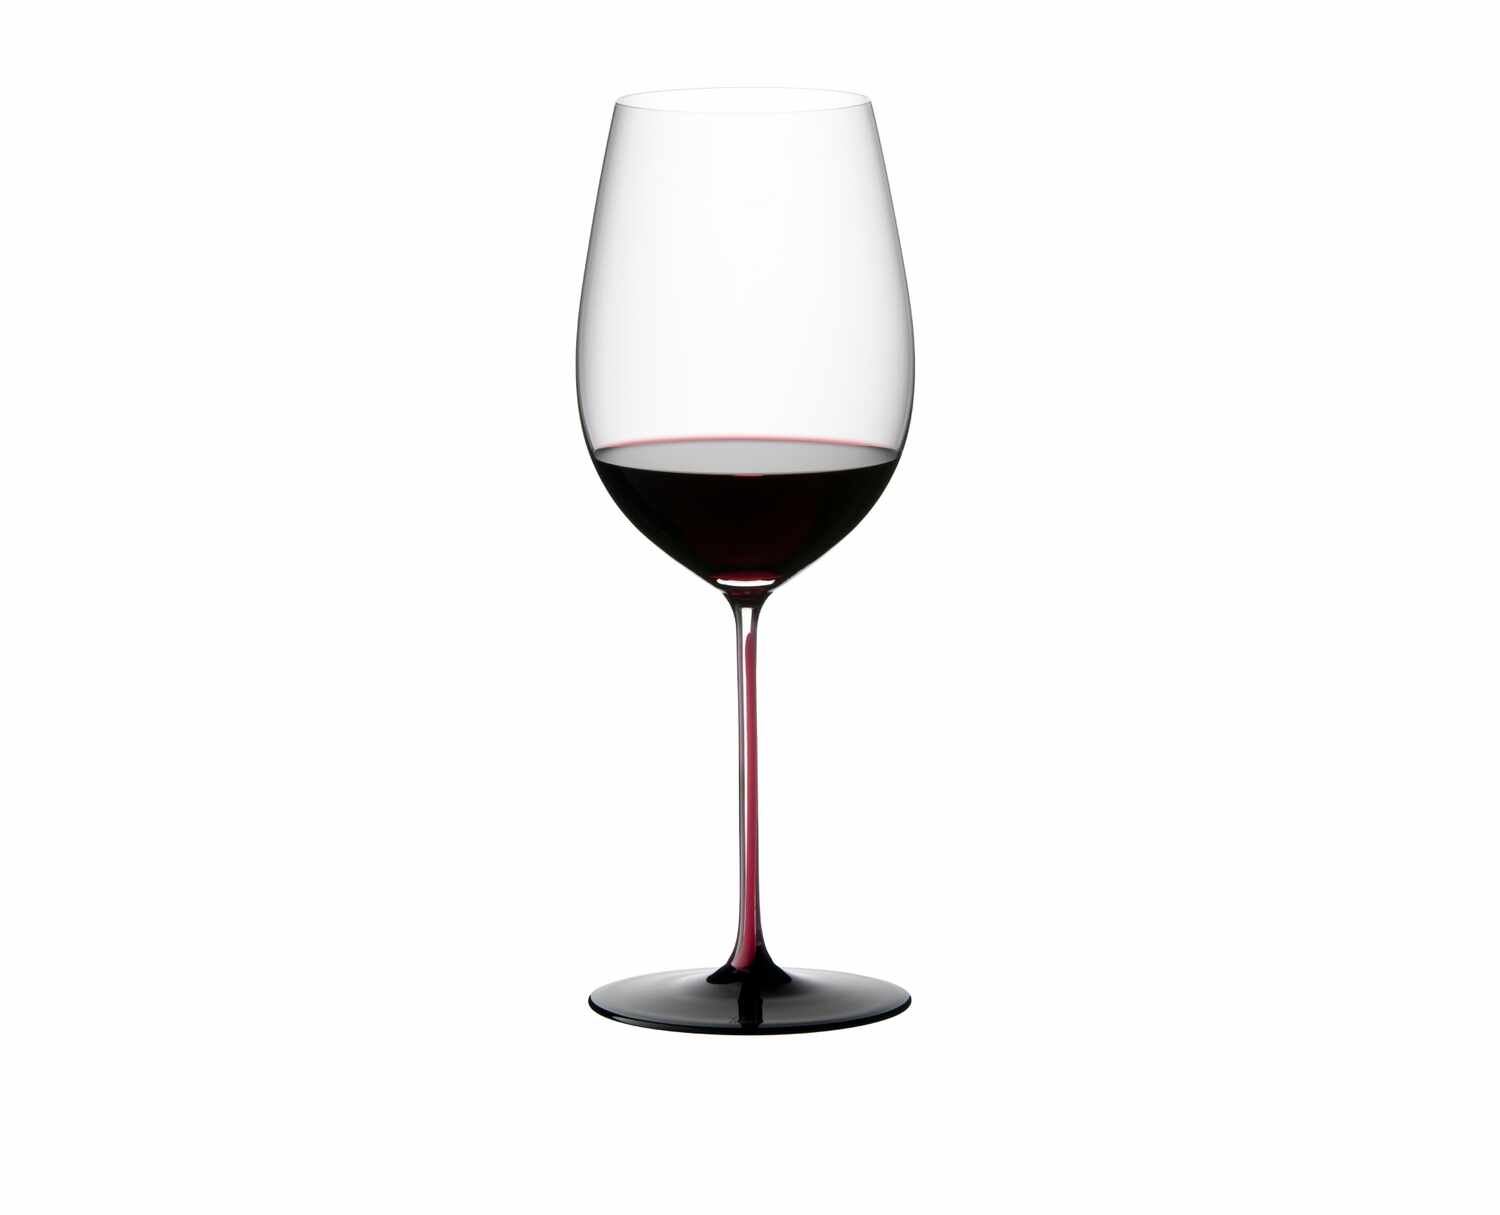  Pahar pentru vin, din cristal Black Series Bordeaux Grand Cru Burgundy / Negru, 860 ml, Riedel la pret 727 lei 